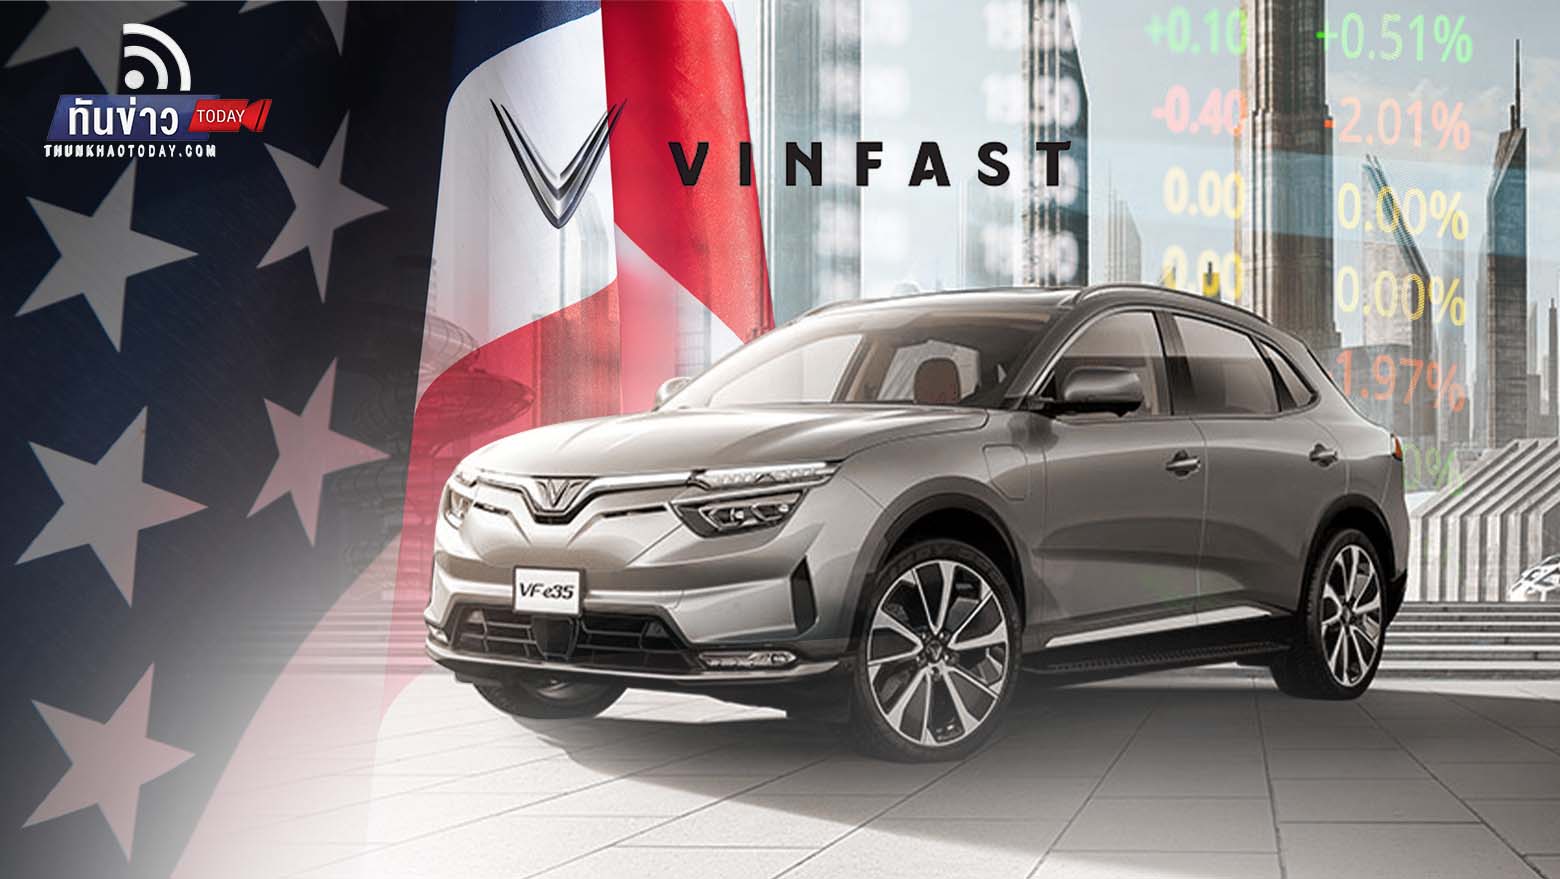 Vinfast บริษัทผลิต EV ยักษ์ใหญ่เวียดนามเลื่อน IPO เข้าตลาดหุ้นสหรัฐฯ เหตุสภาพตลาดปีนี้ไม่เอื้ออำนวย